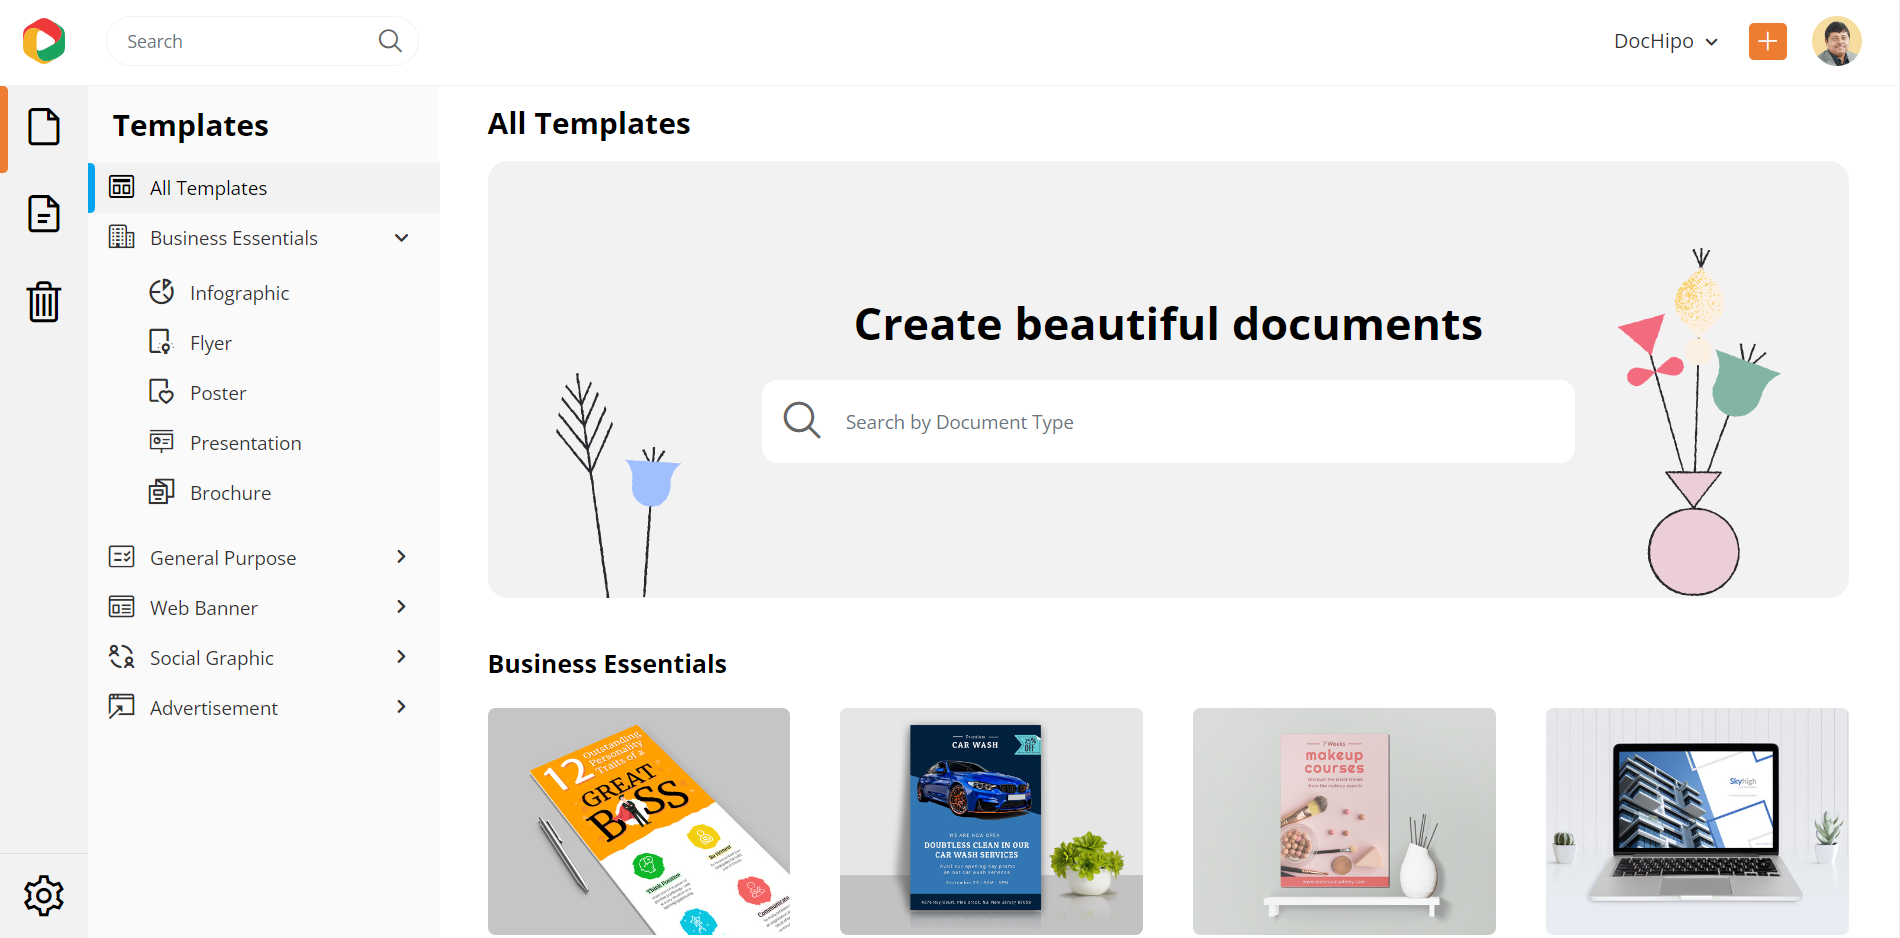 Content creation tools | DocHipo